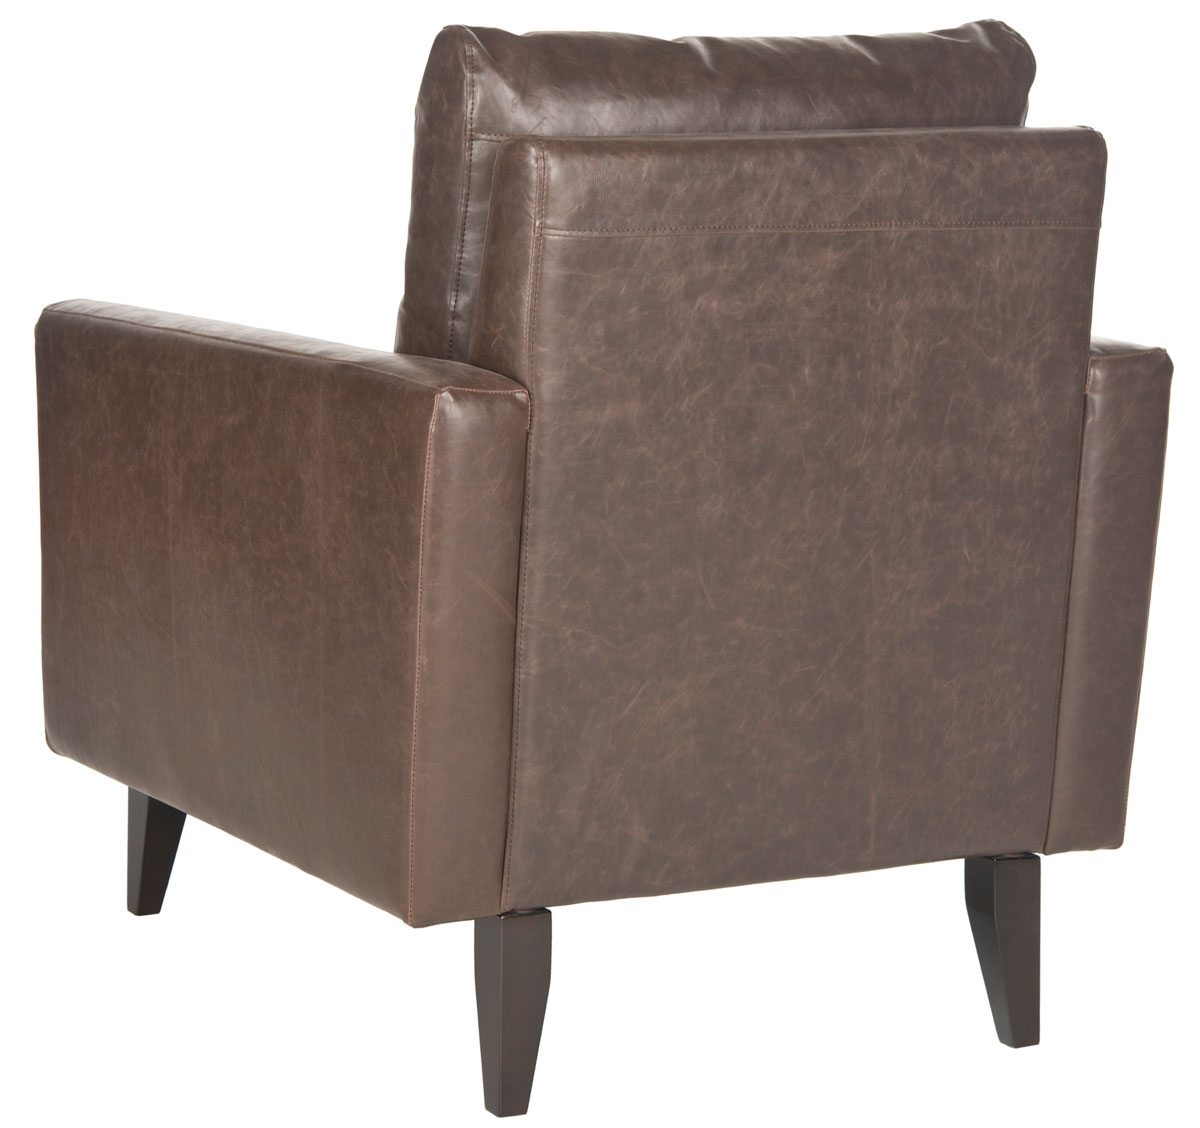 Mid Century Modern Caleb Club Chair - Antique Brown/Espresso - Arlo Home - Image 2